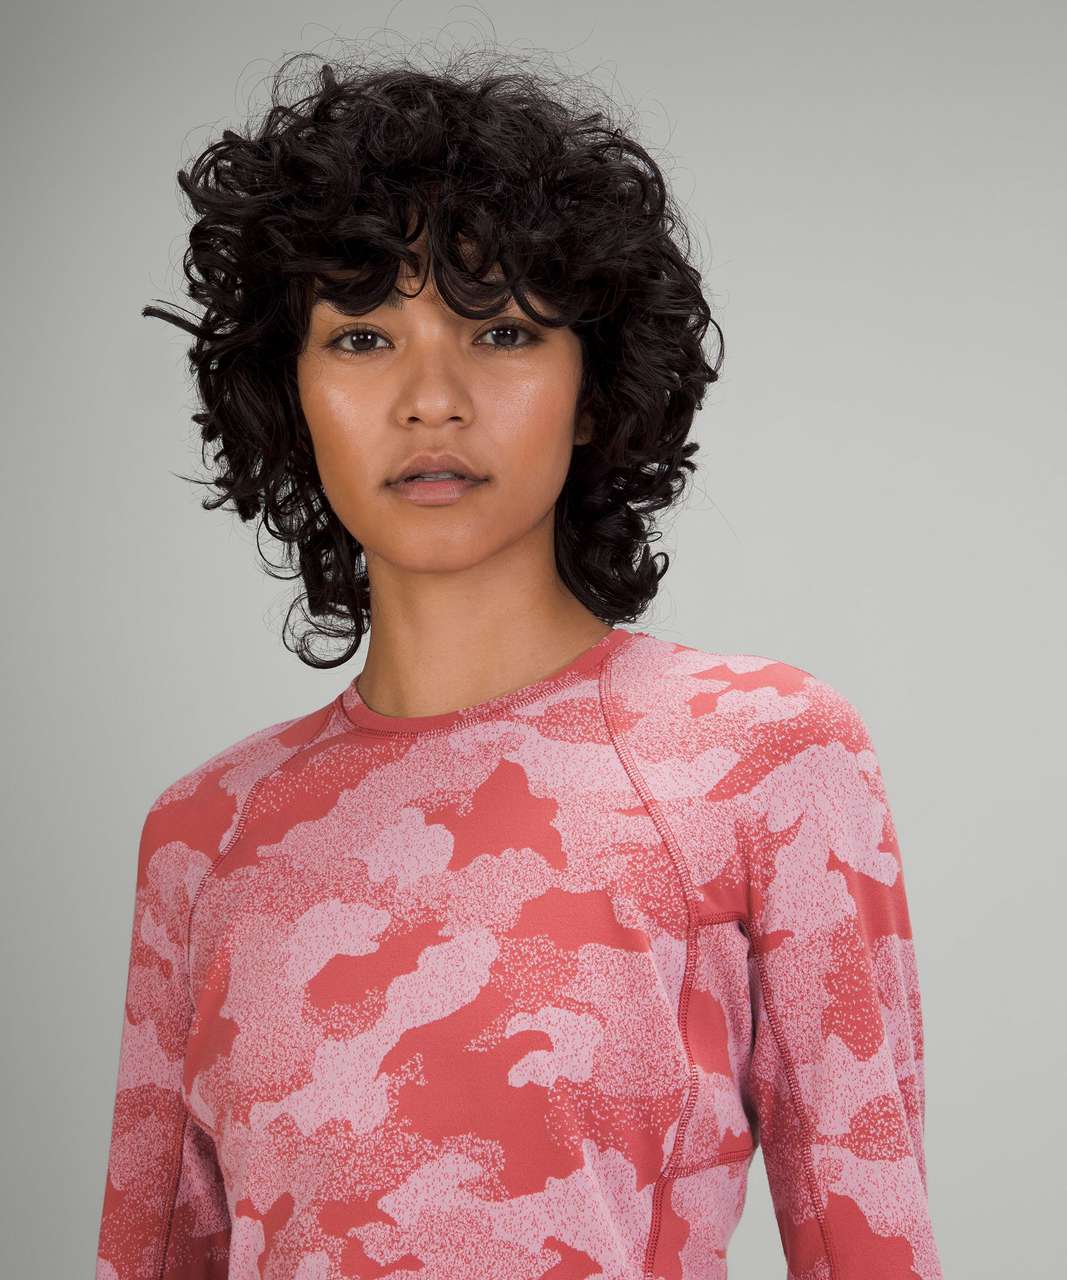 Lululemon Its Rulu Run Long Sleeve Shirt - Heritage Speckle Camo Jacquard Soft Cranberry Pink Taupe